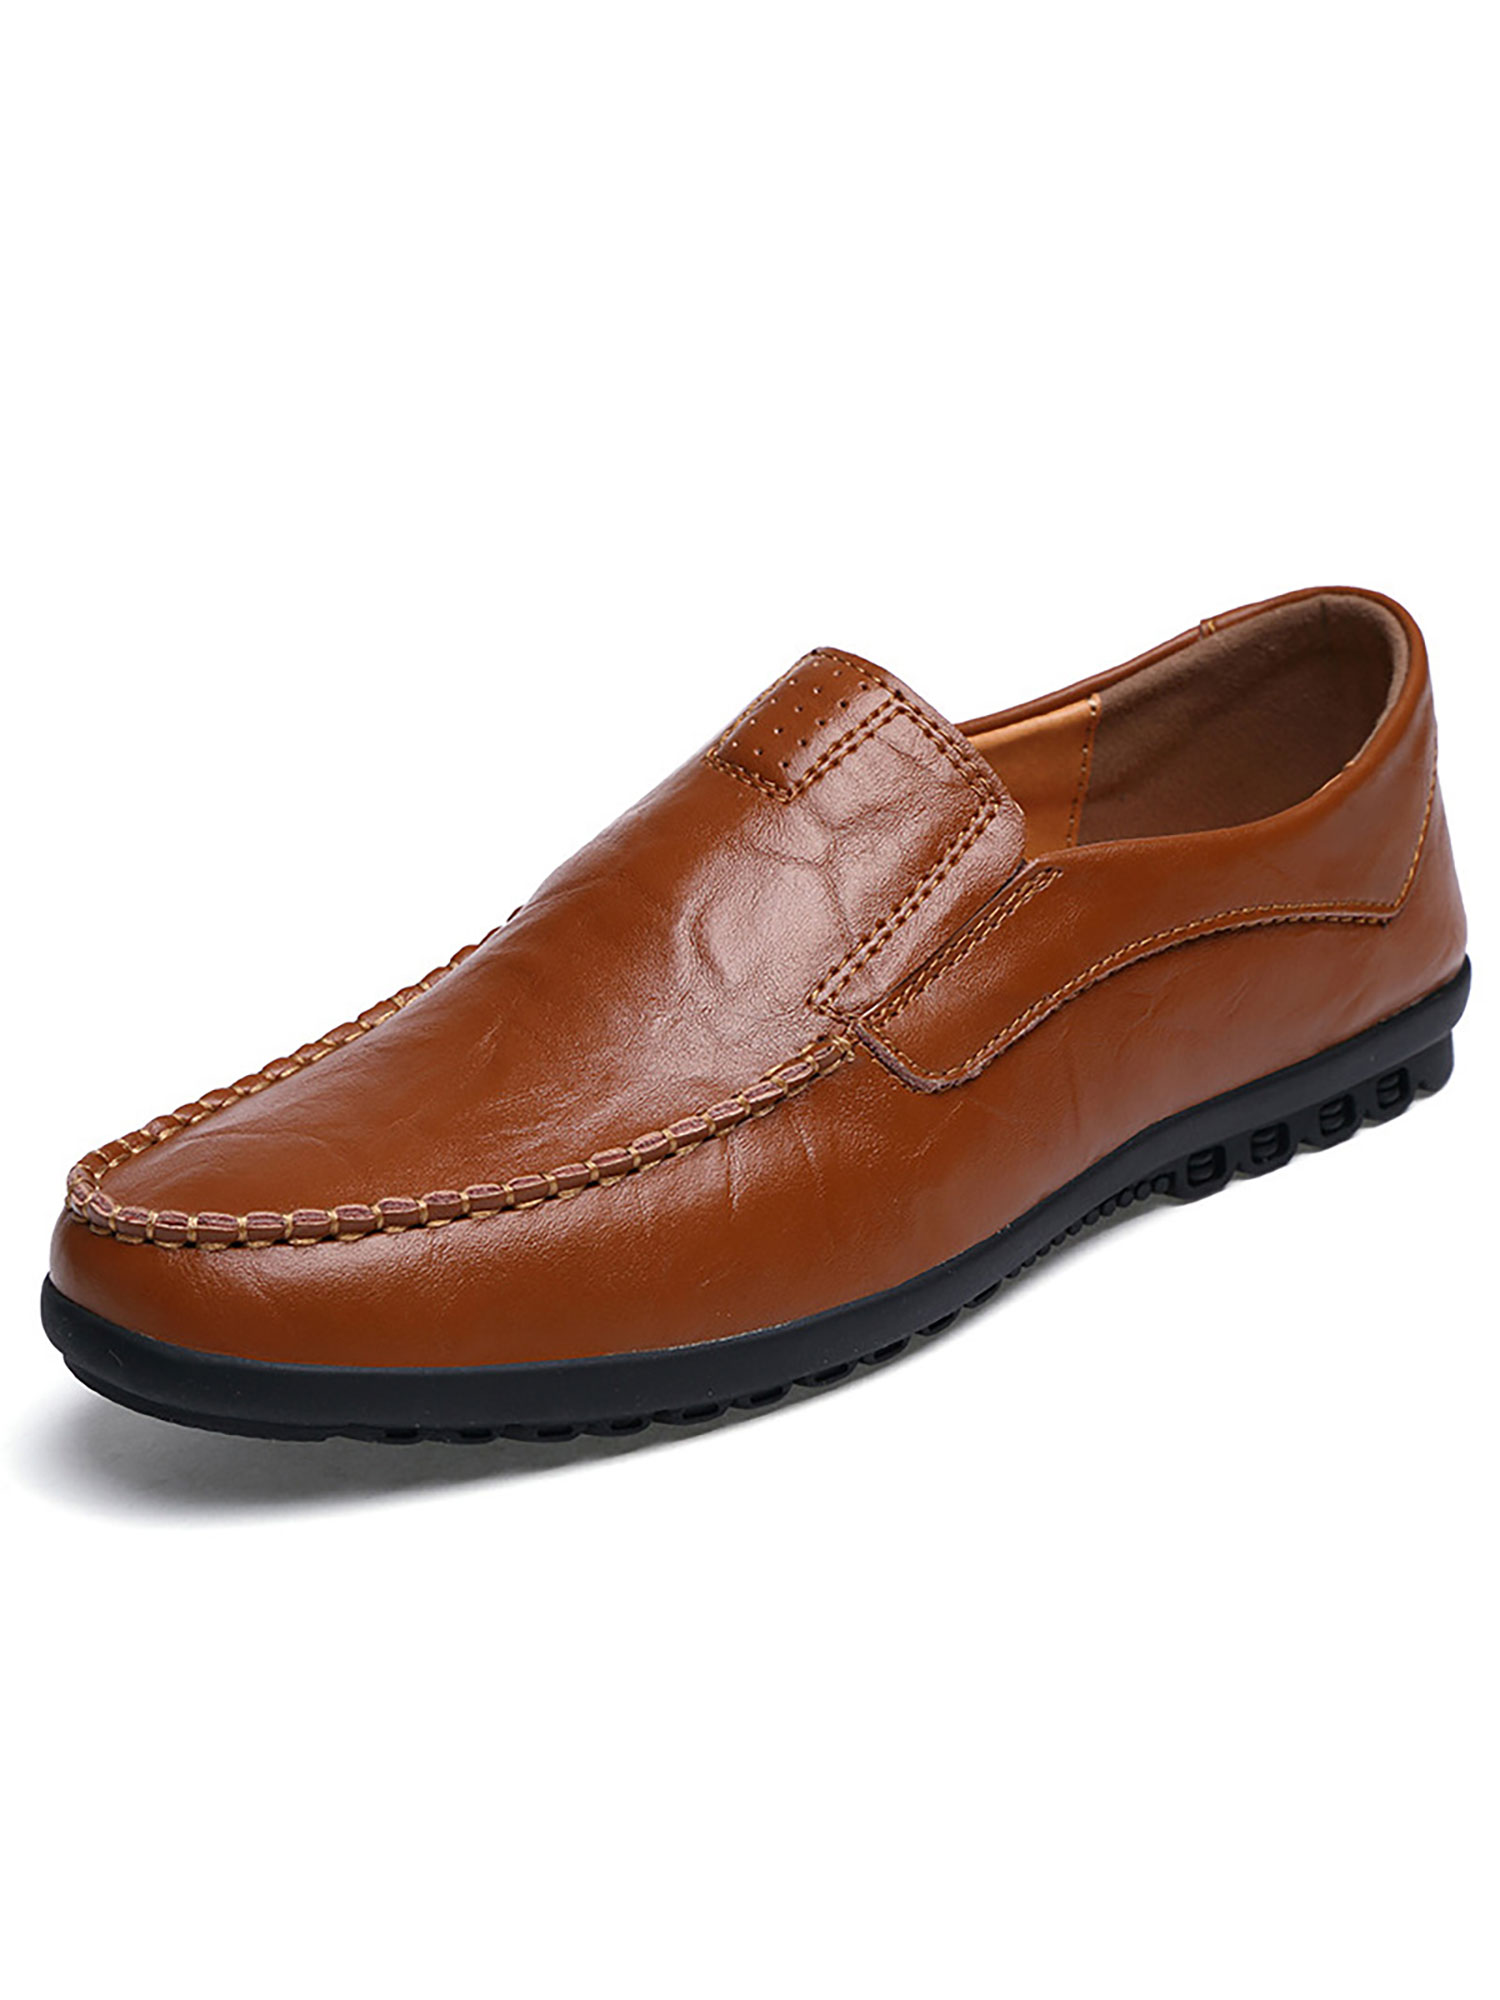 Frontwalk Men Flats Comfort Loafers Slip On Boat Shoe Office Casual ...